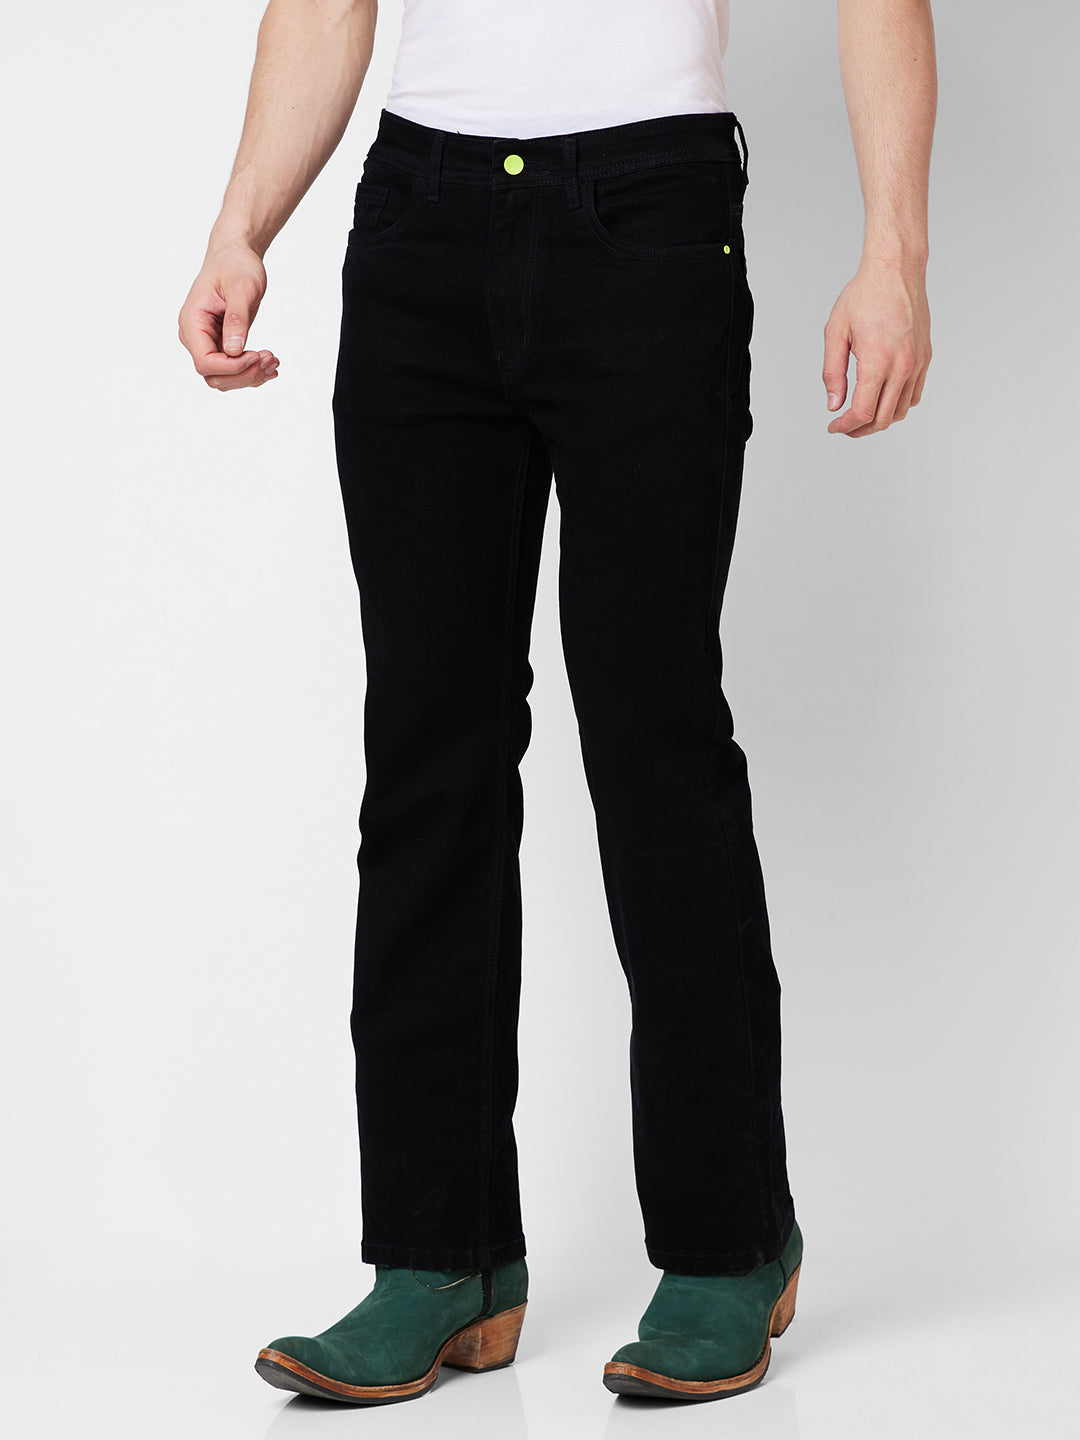 Basic Black Boot-cut Jeans